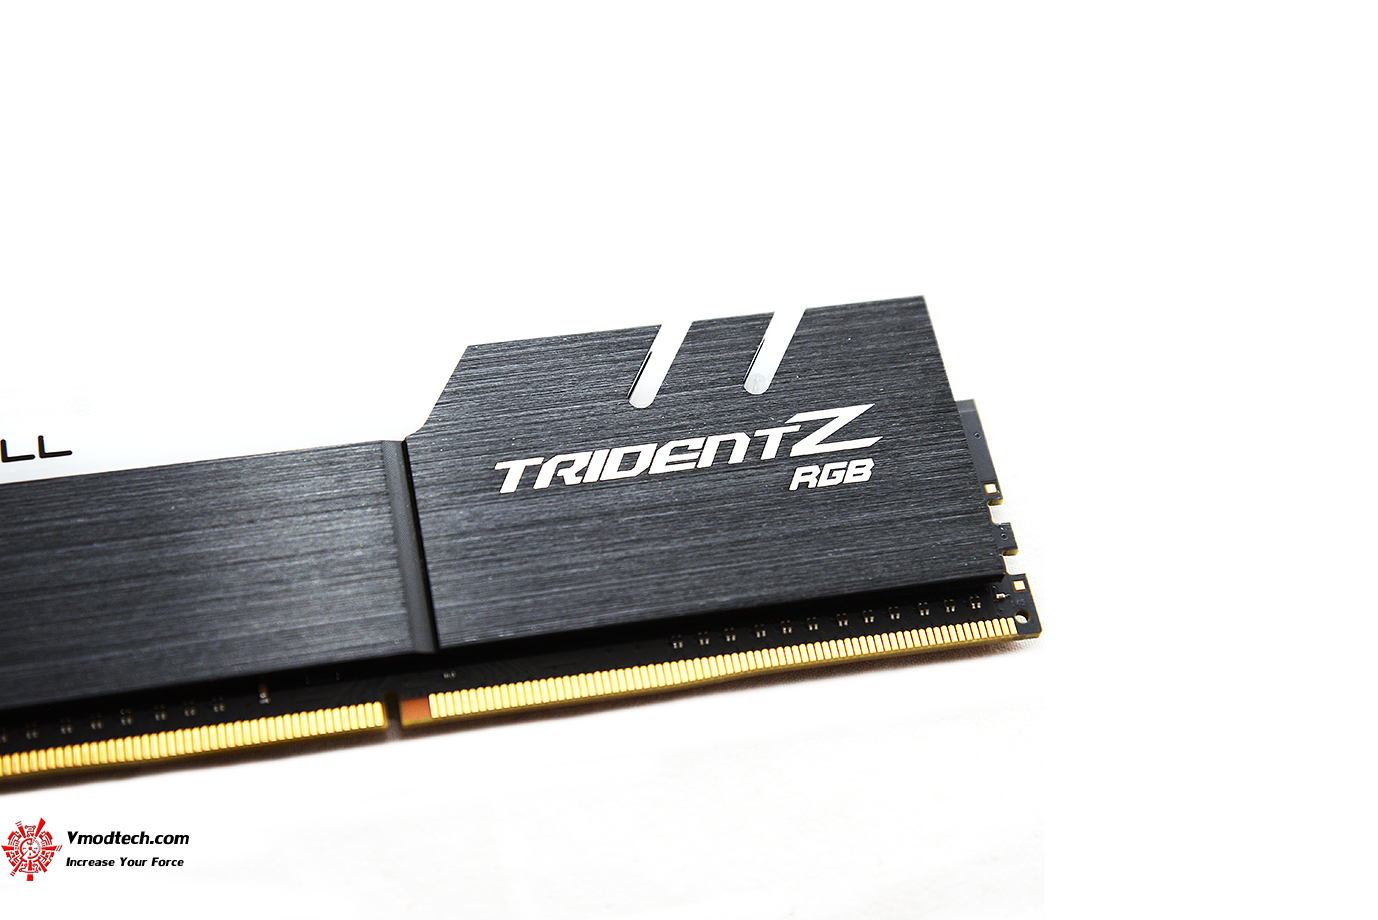 dsc 8085 G.SKILL Trident Z RGB DDR4 3200 (8X2) 16GB REVIEW